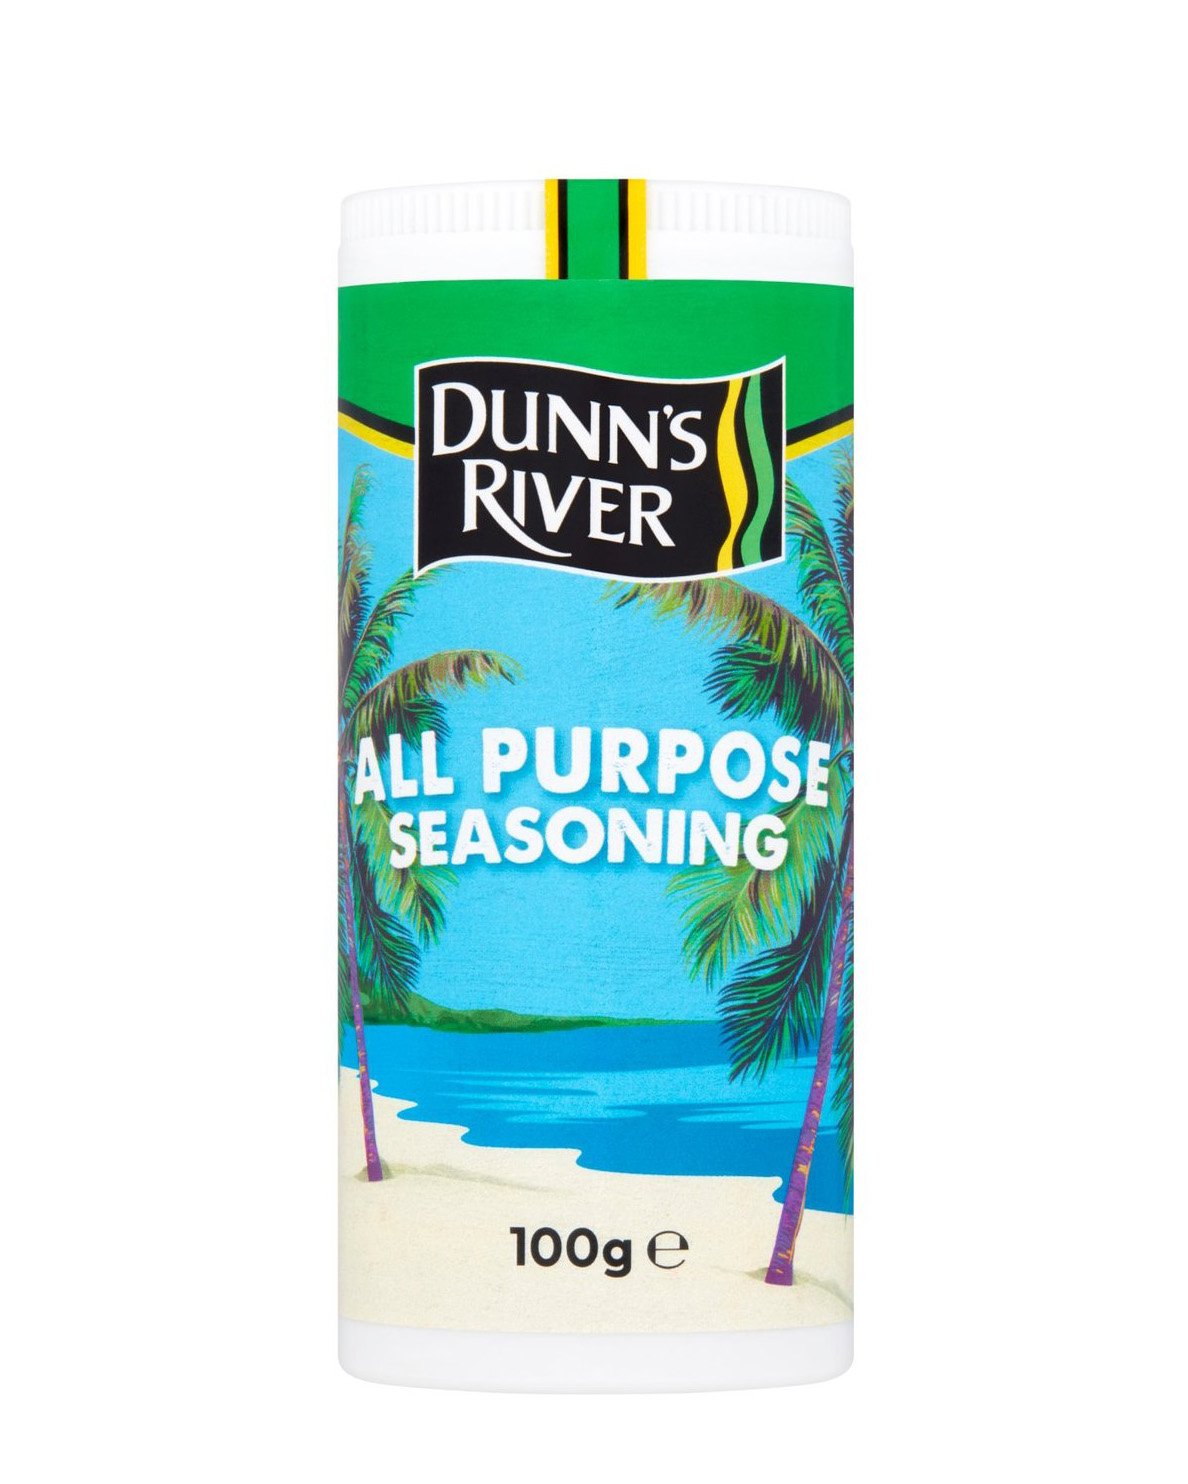 Dunn's River All Purpose Seasoning 100g Box of 12